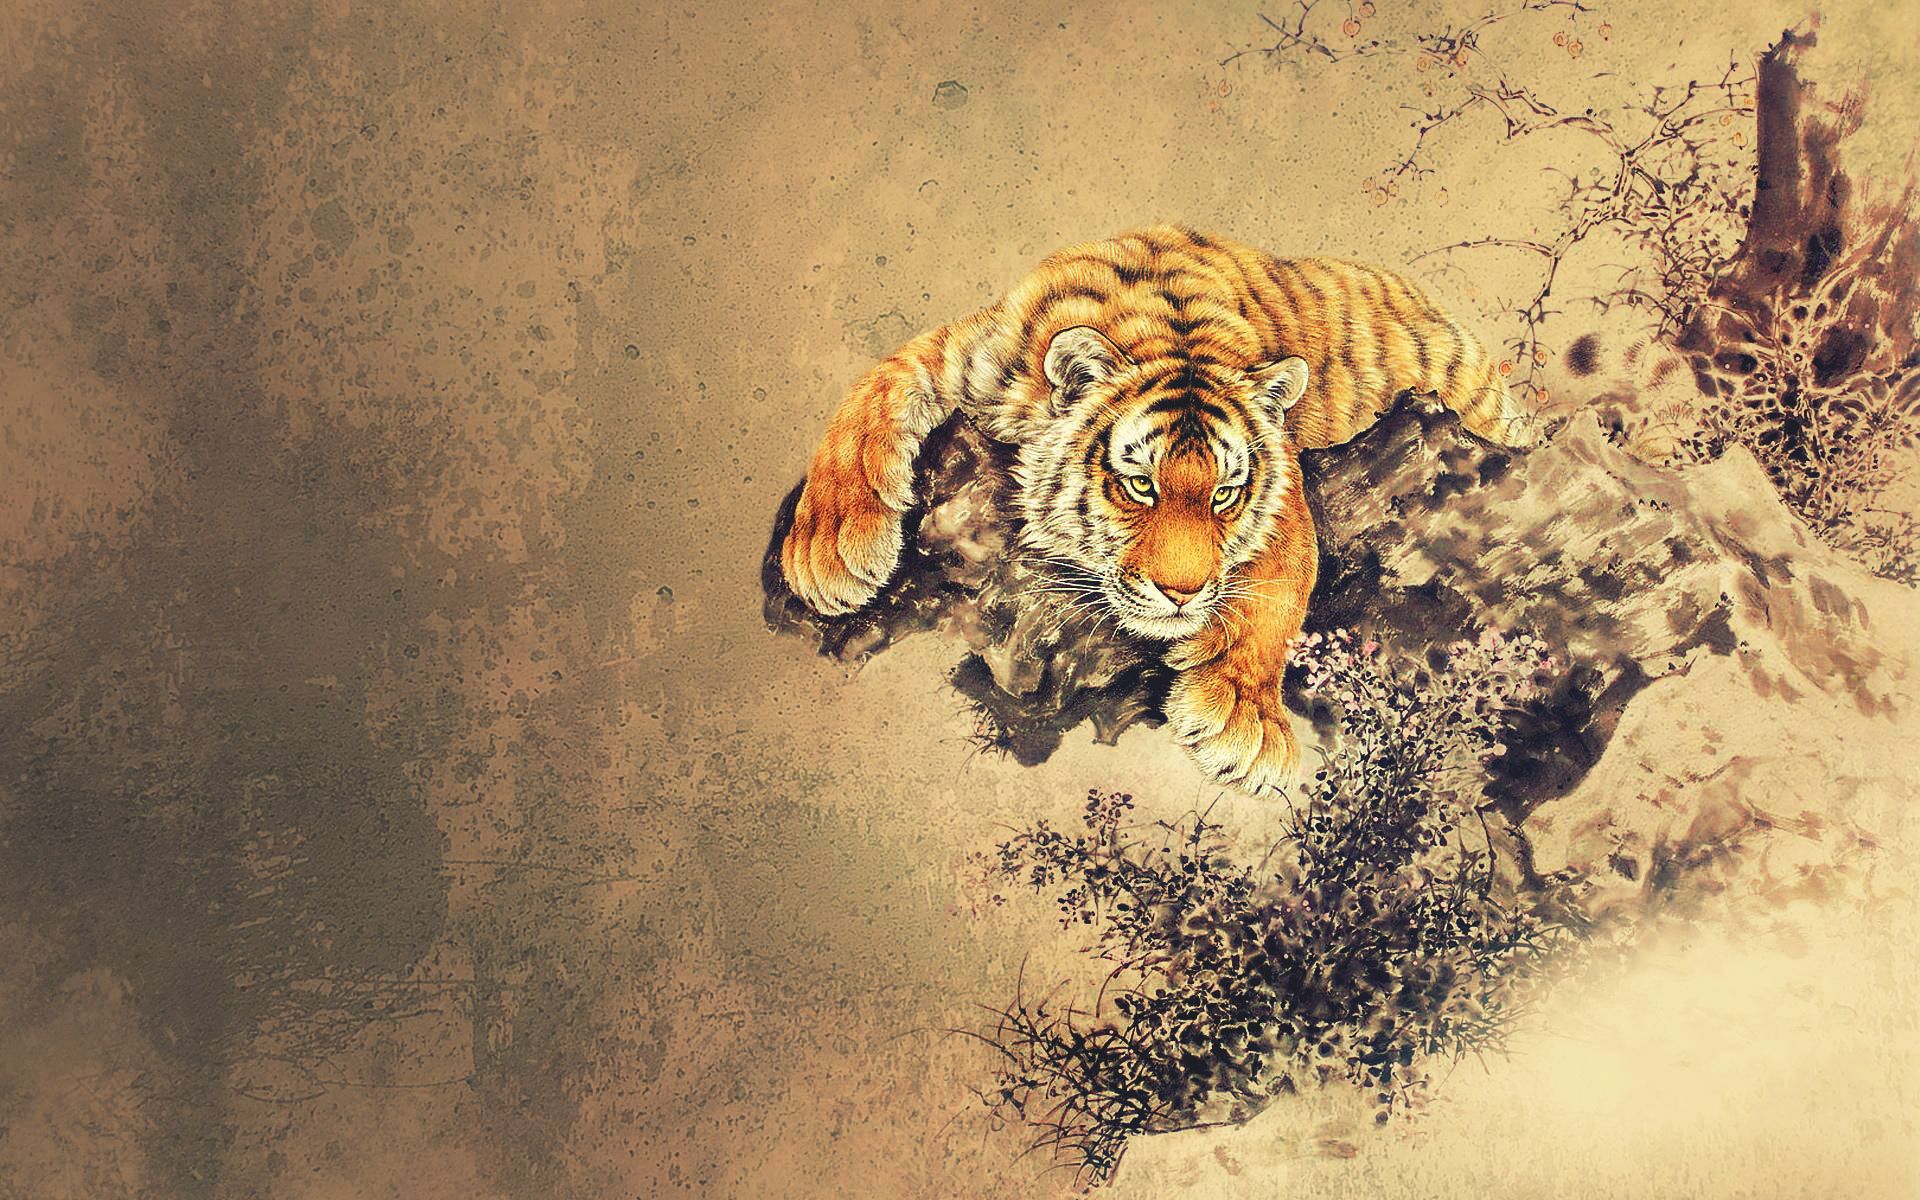 Asian Artwork Tiger | Artwork genius | Pinterest | Tigers ...